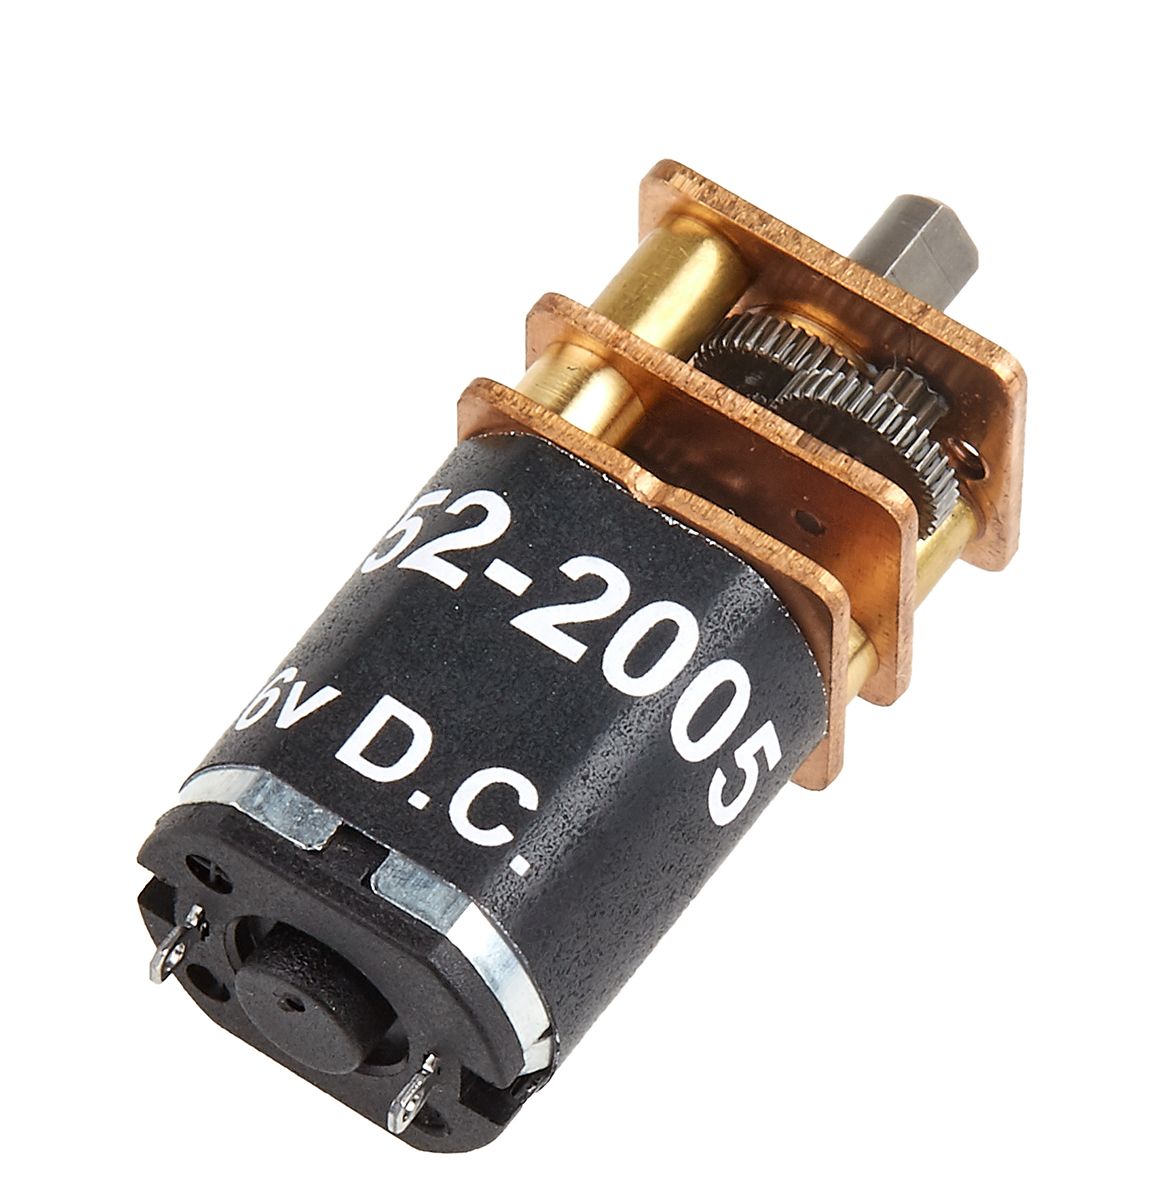 RS PRO Brushed DC Motor, 0.58 W, 6 V, 3.9 gcm, 13500 rpm, 2.5mm Shaft Diameter